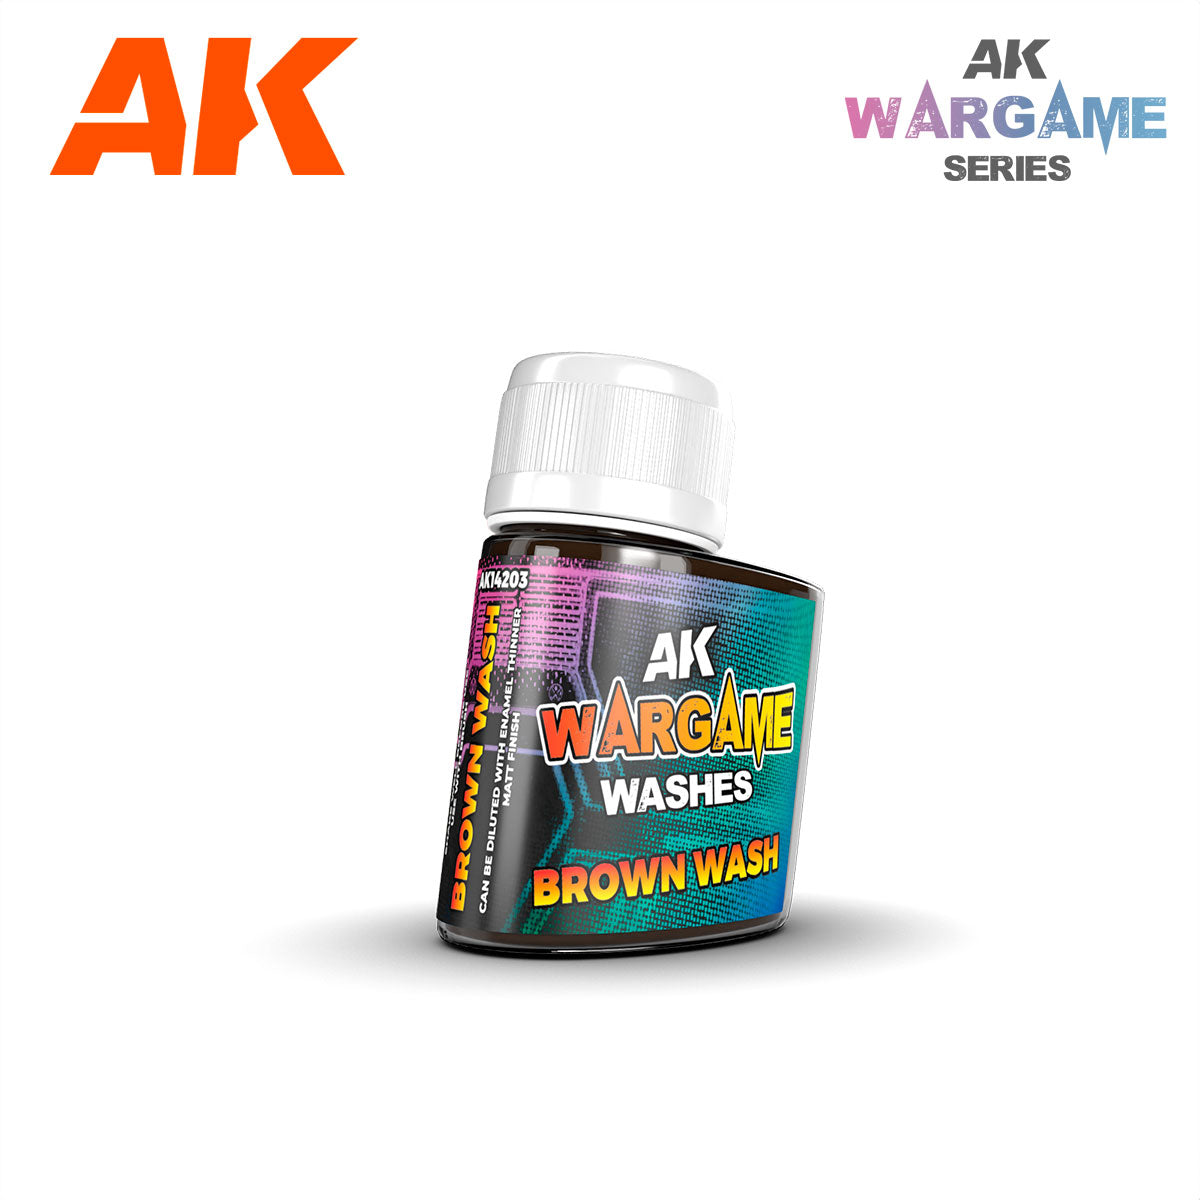 AK14203 - Brown wash (35ml) - Wargame Wash